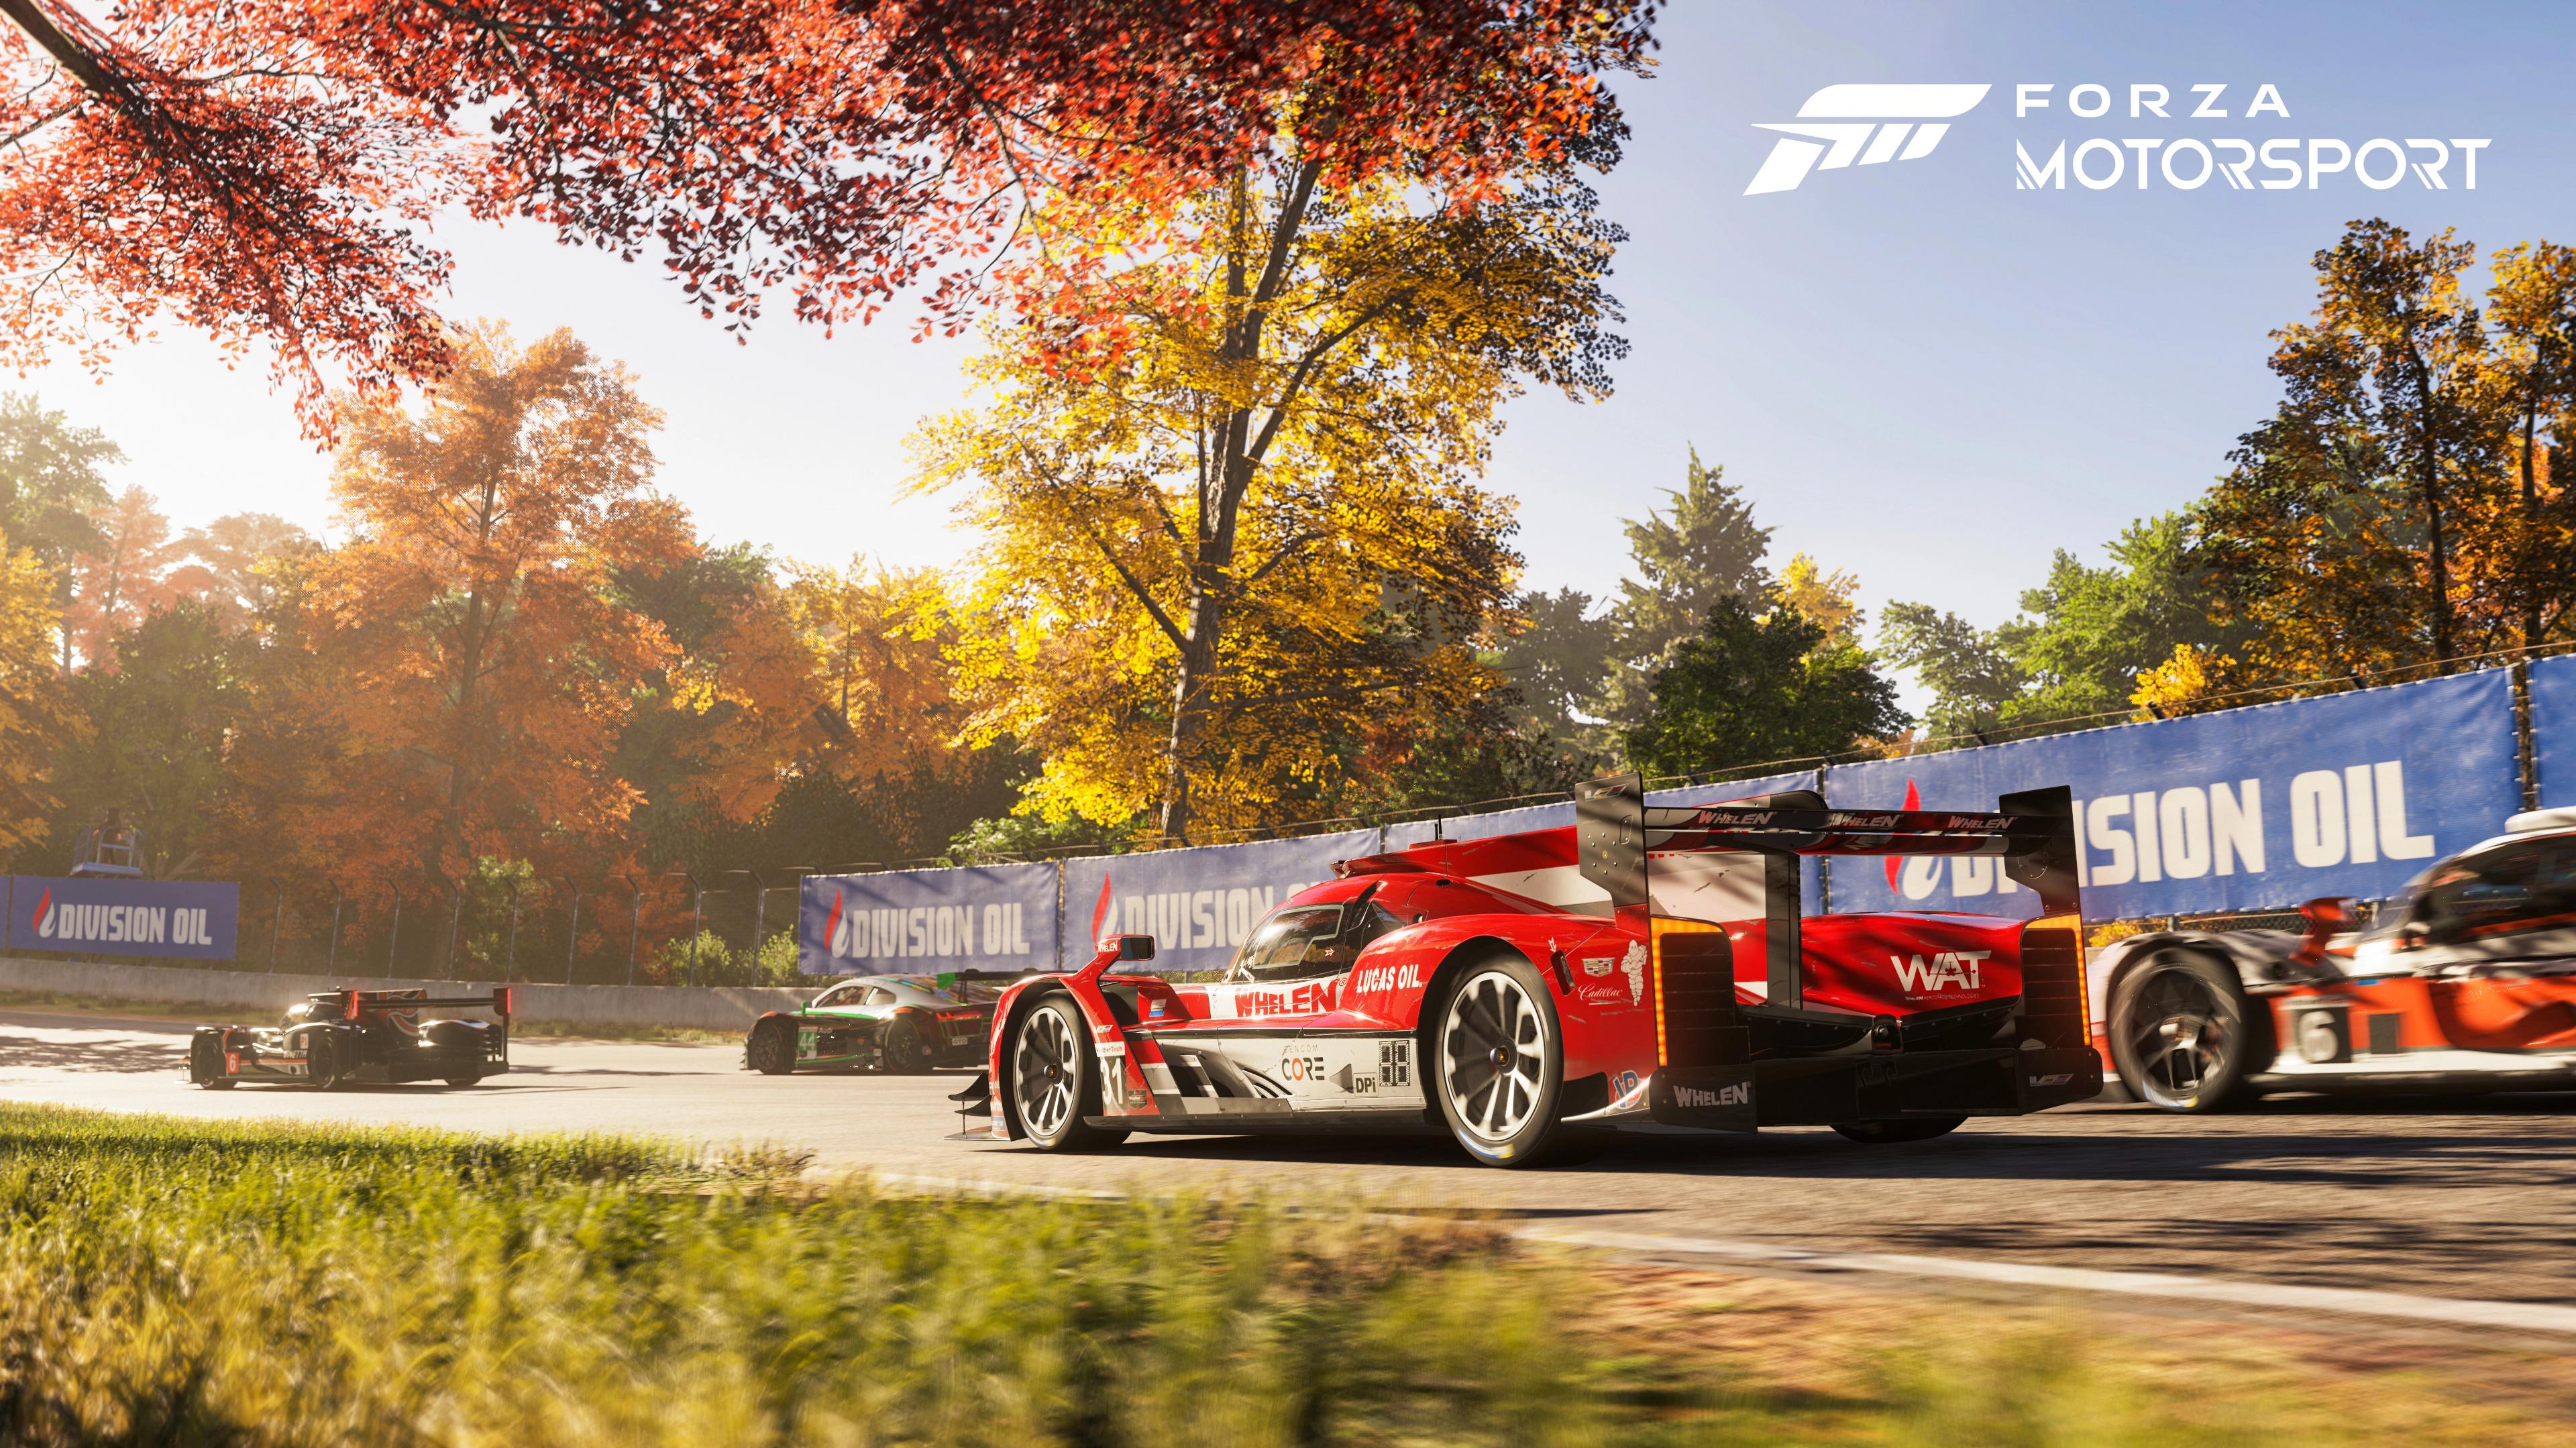 Video Game Forza Motorsport 4k Ultra HD Wallpaper